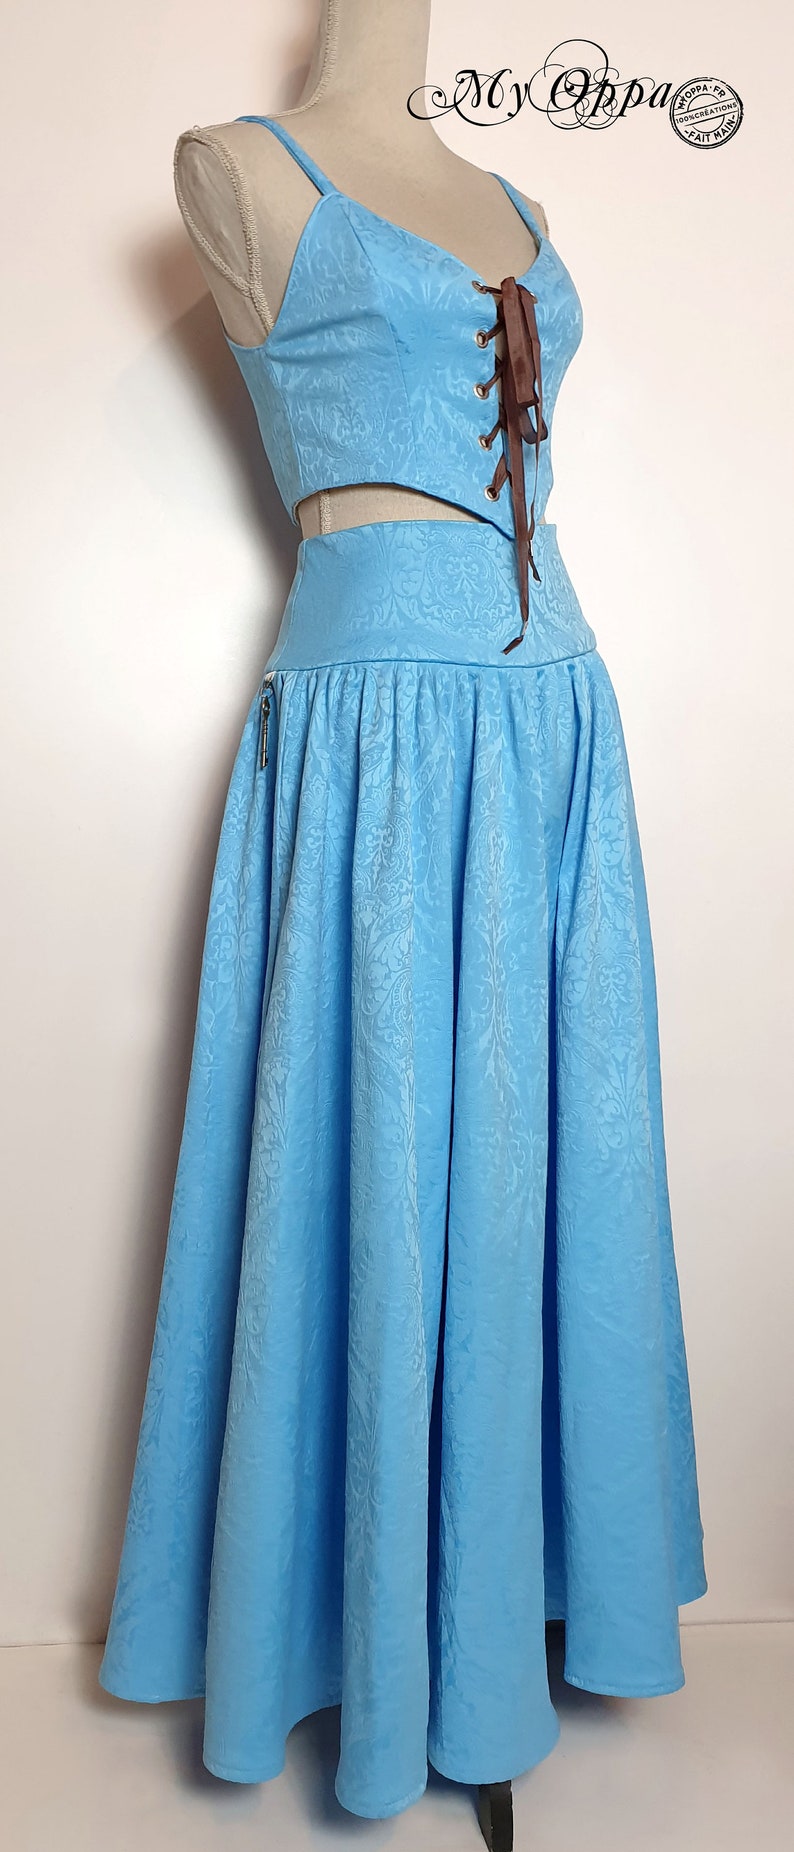 Extra long blue princess baroque pattern skirt, women's dance clothing, ethnic bohemian summer wedding ceremony image 2